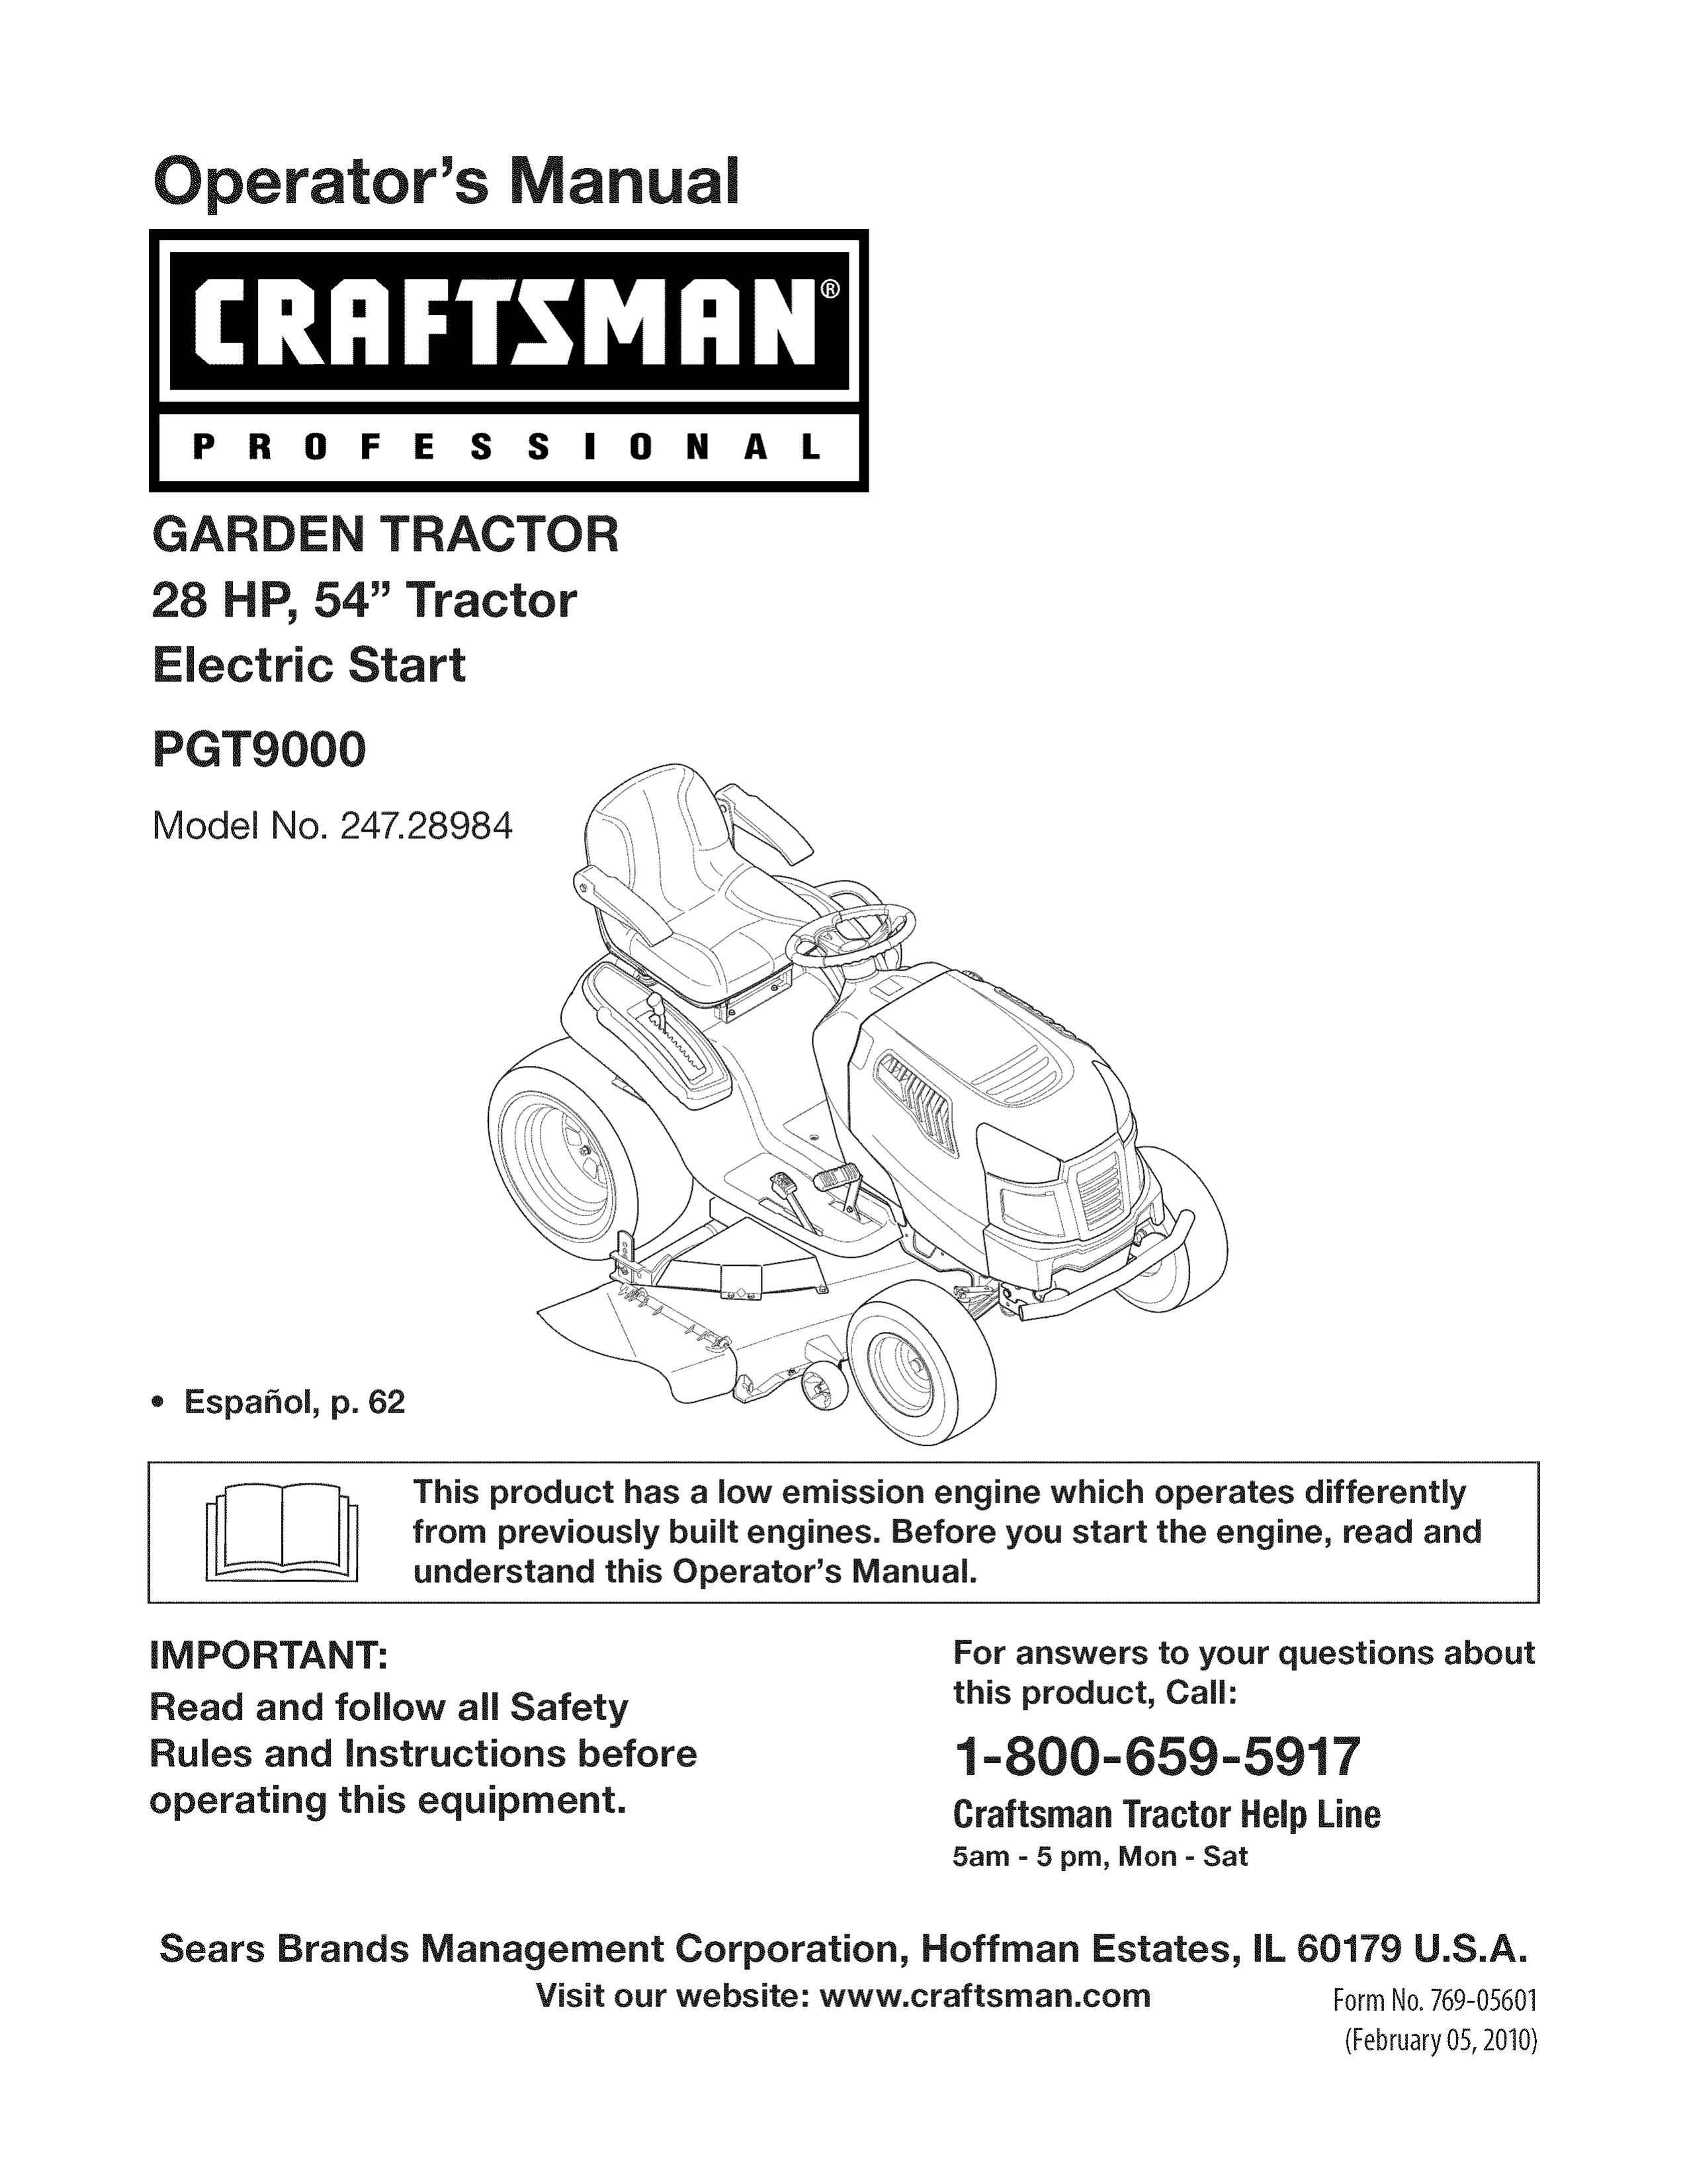 Craftsman 247.28984 Lawn Mower User Manual